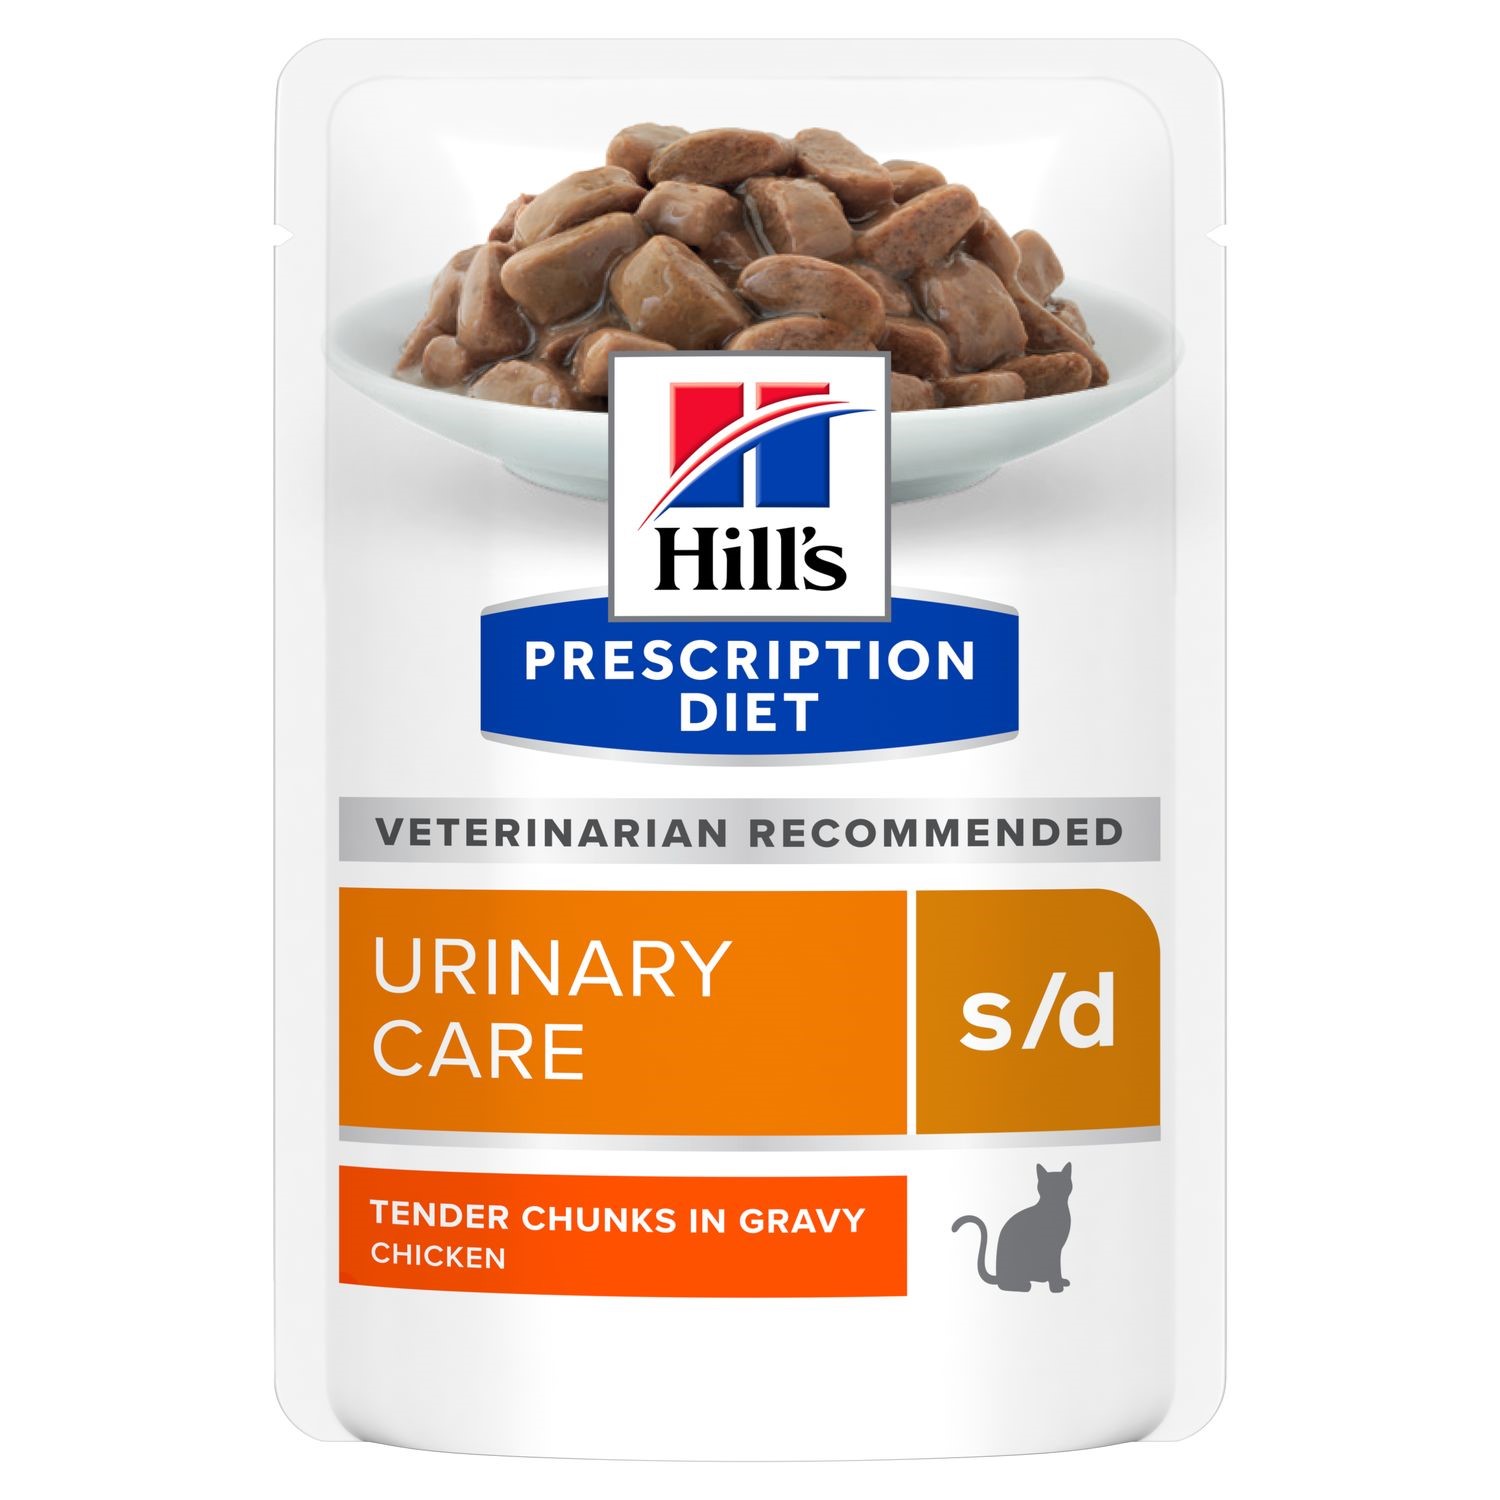 פאוצ' מזון s/d | Hill's Prescription Diet לחתול בוגר, 85 גר' (12 יח')